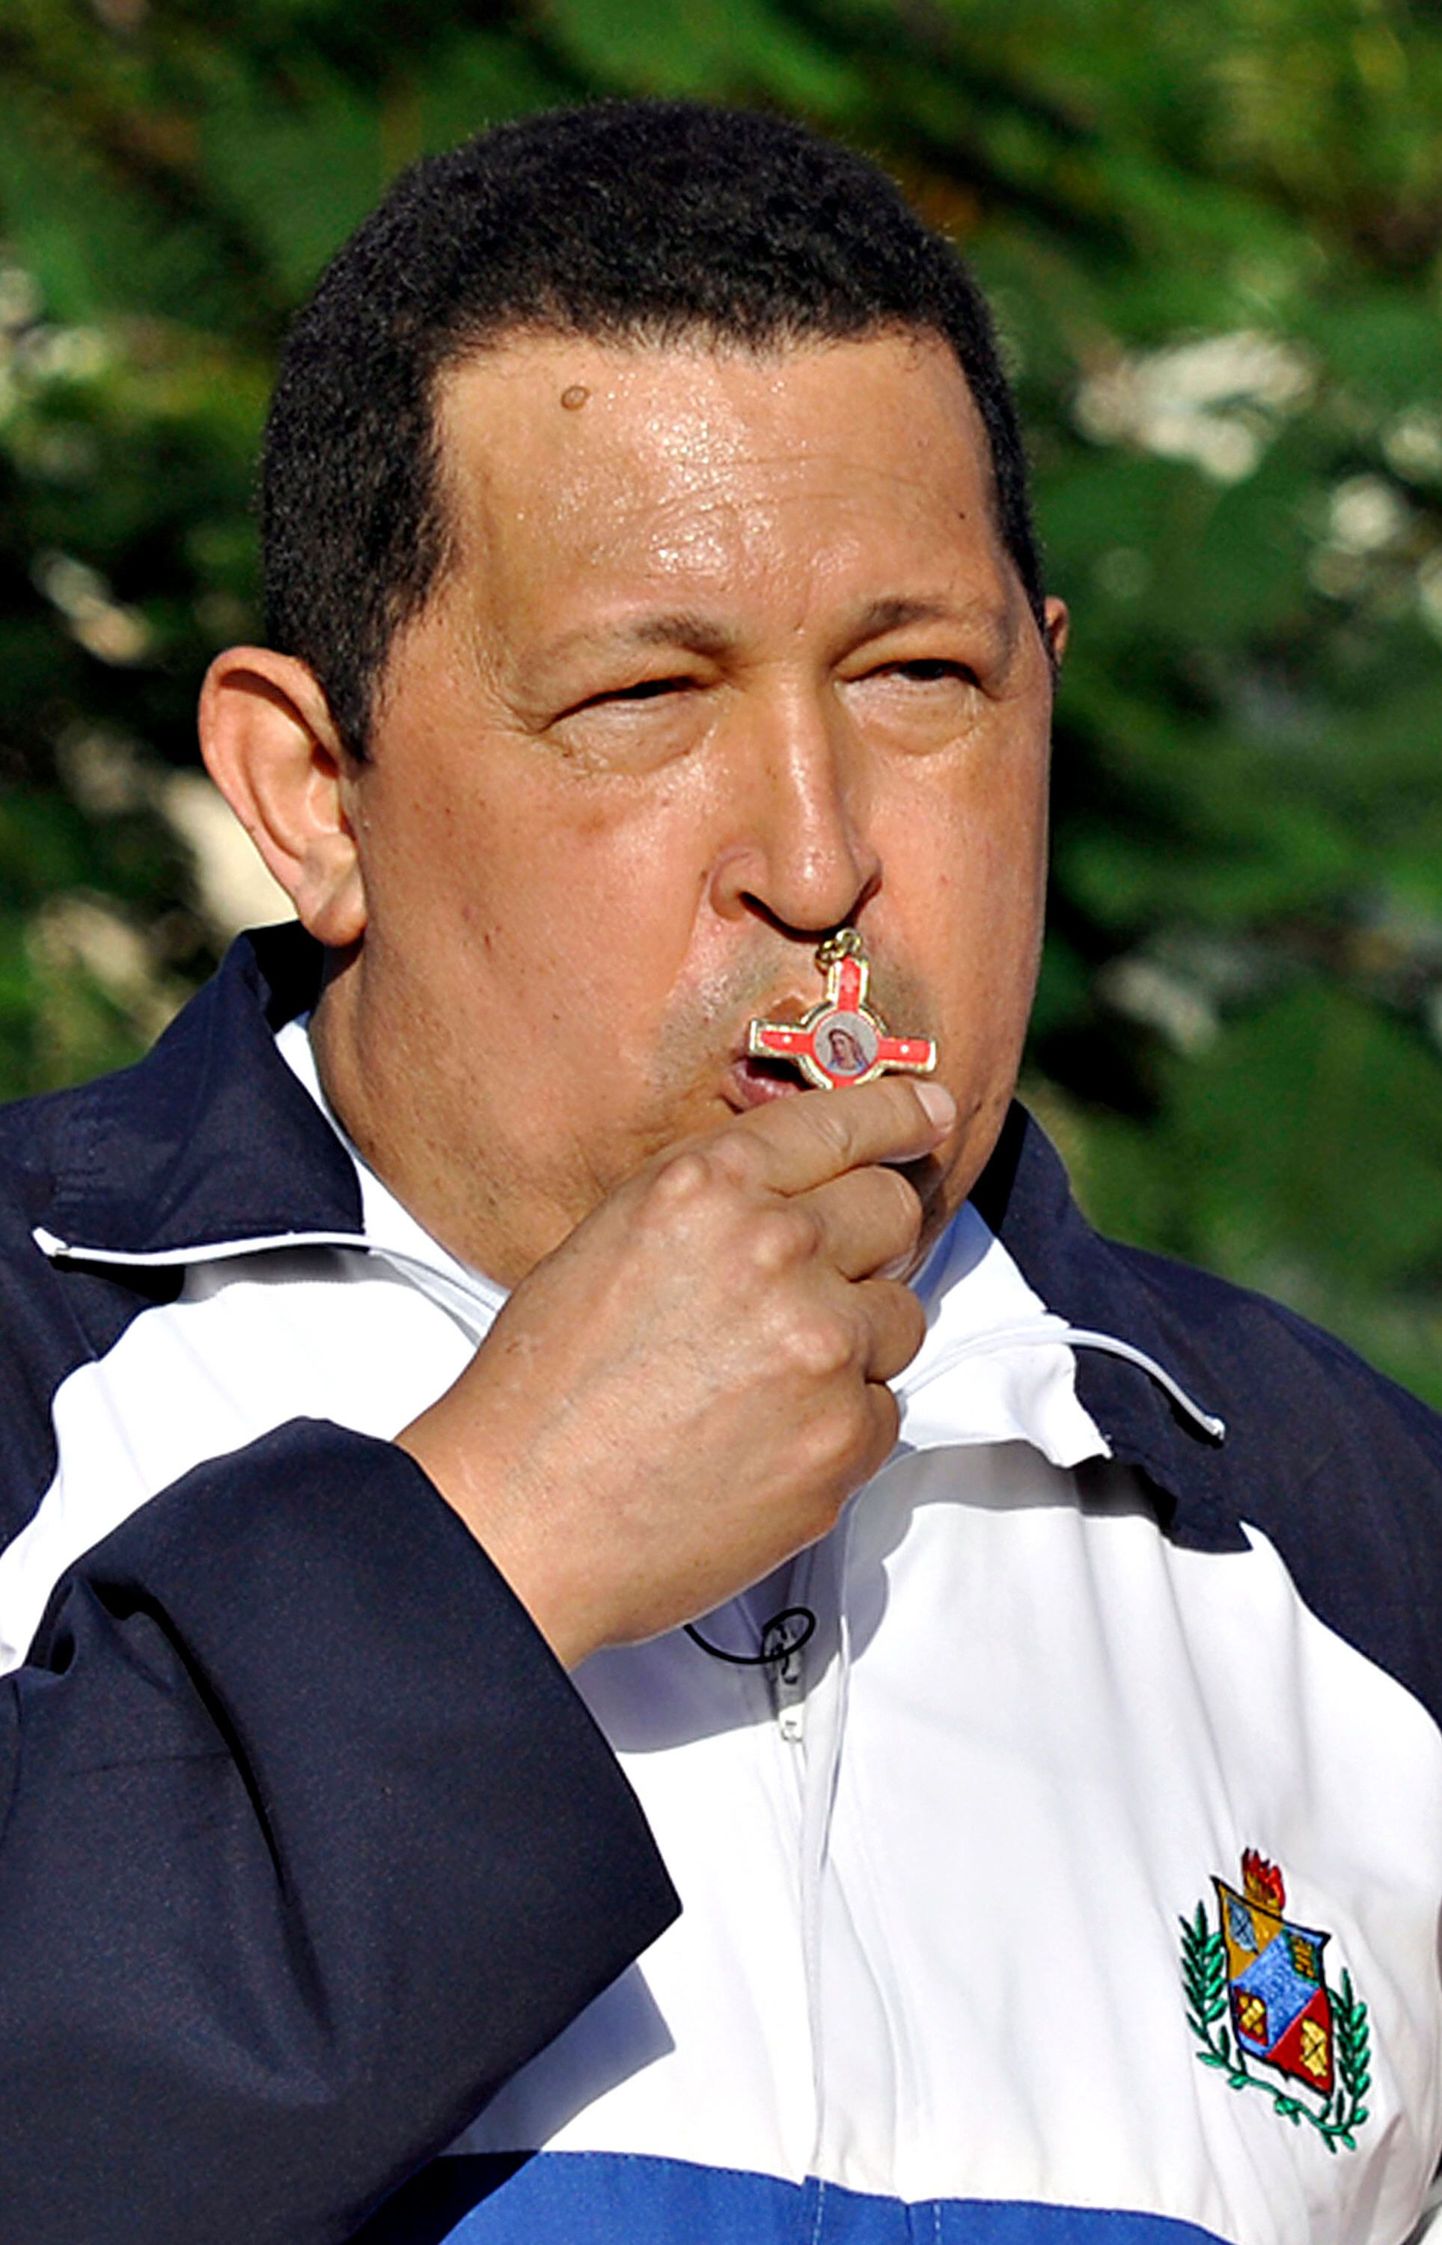 Venezuela president Hugo Chavez